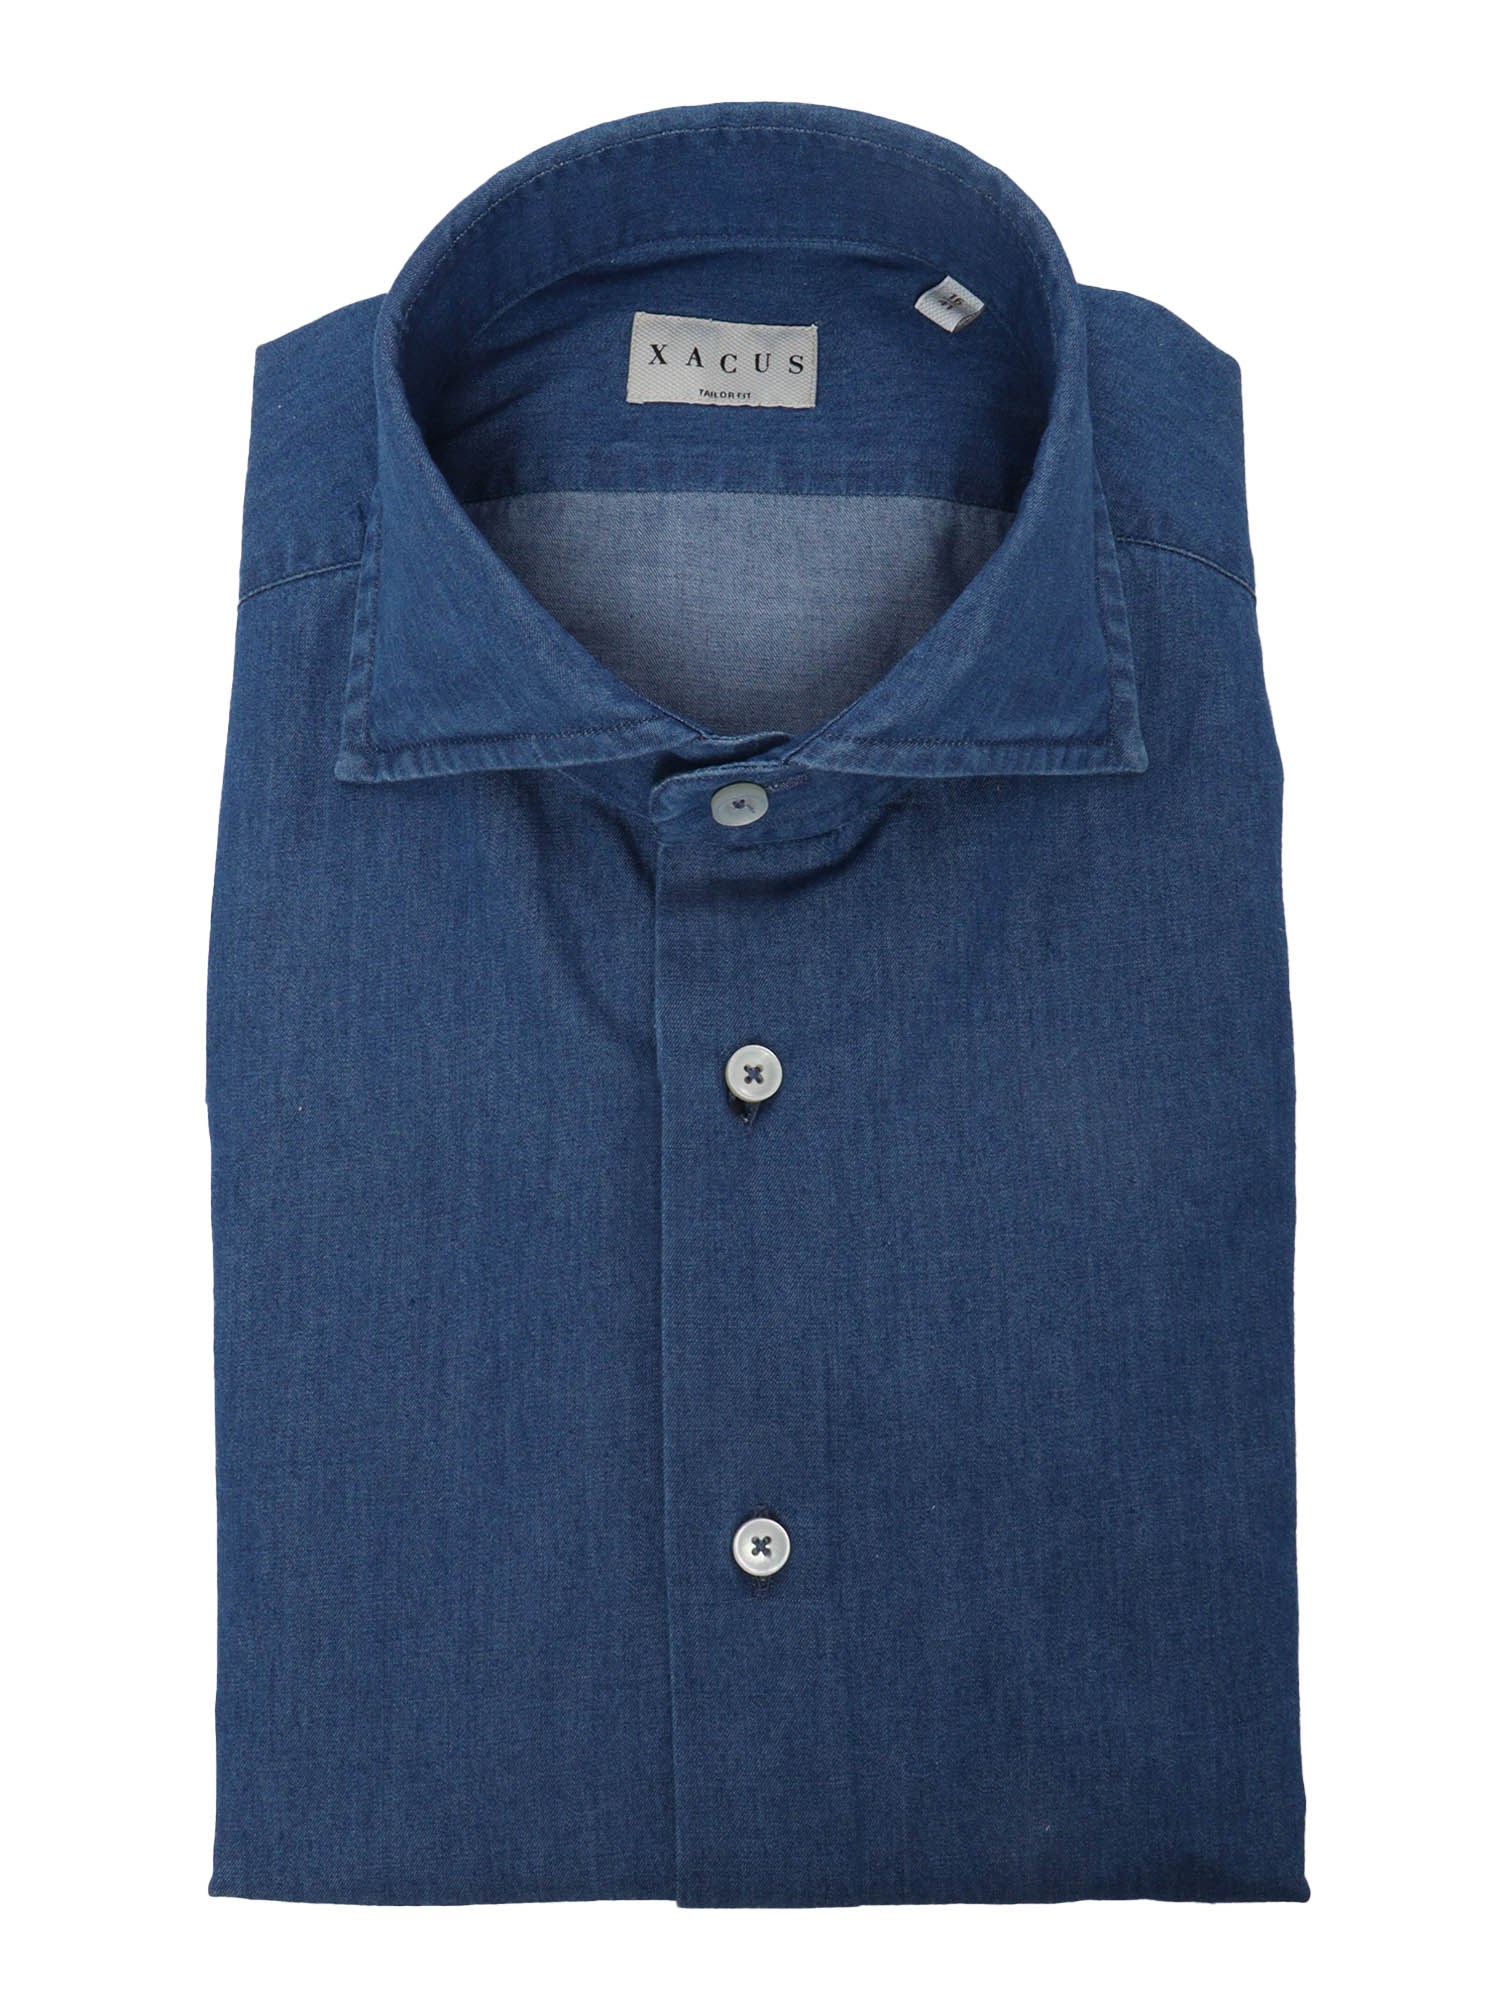 Shop Xacus Blue Cotton Shirt In Multi